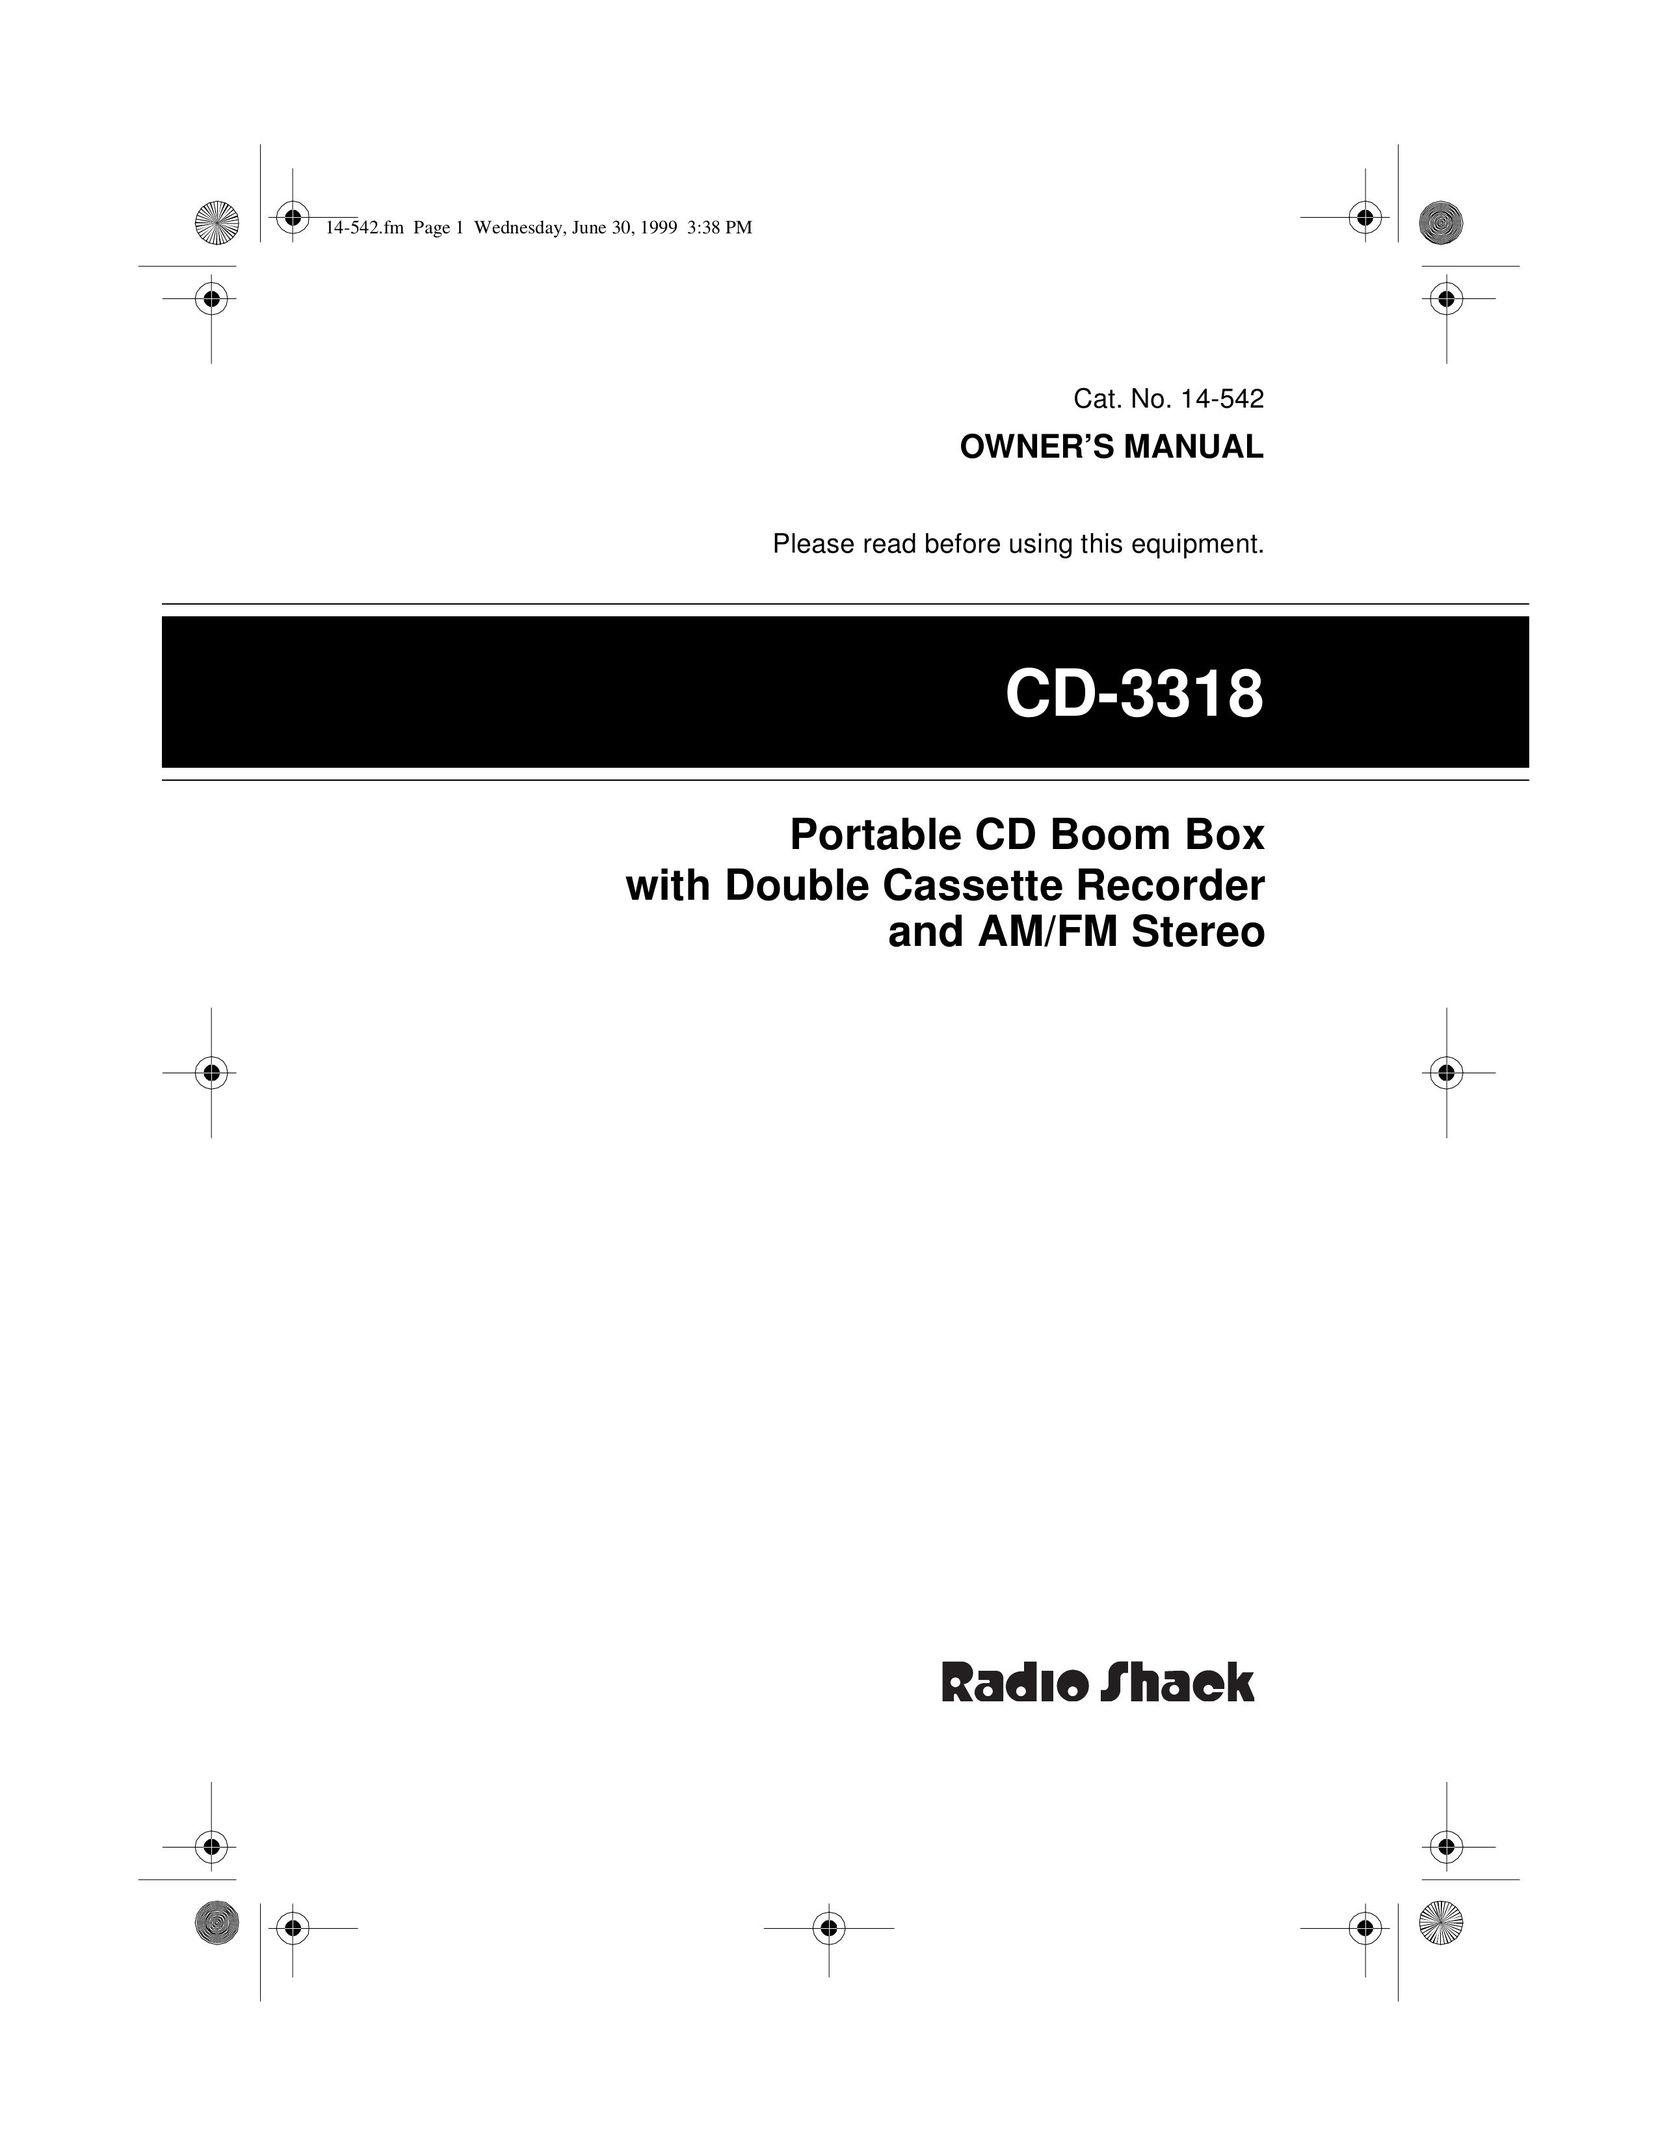 Radio Shack CD-3318 CD Player User Manual